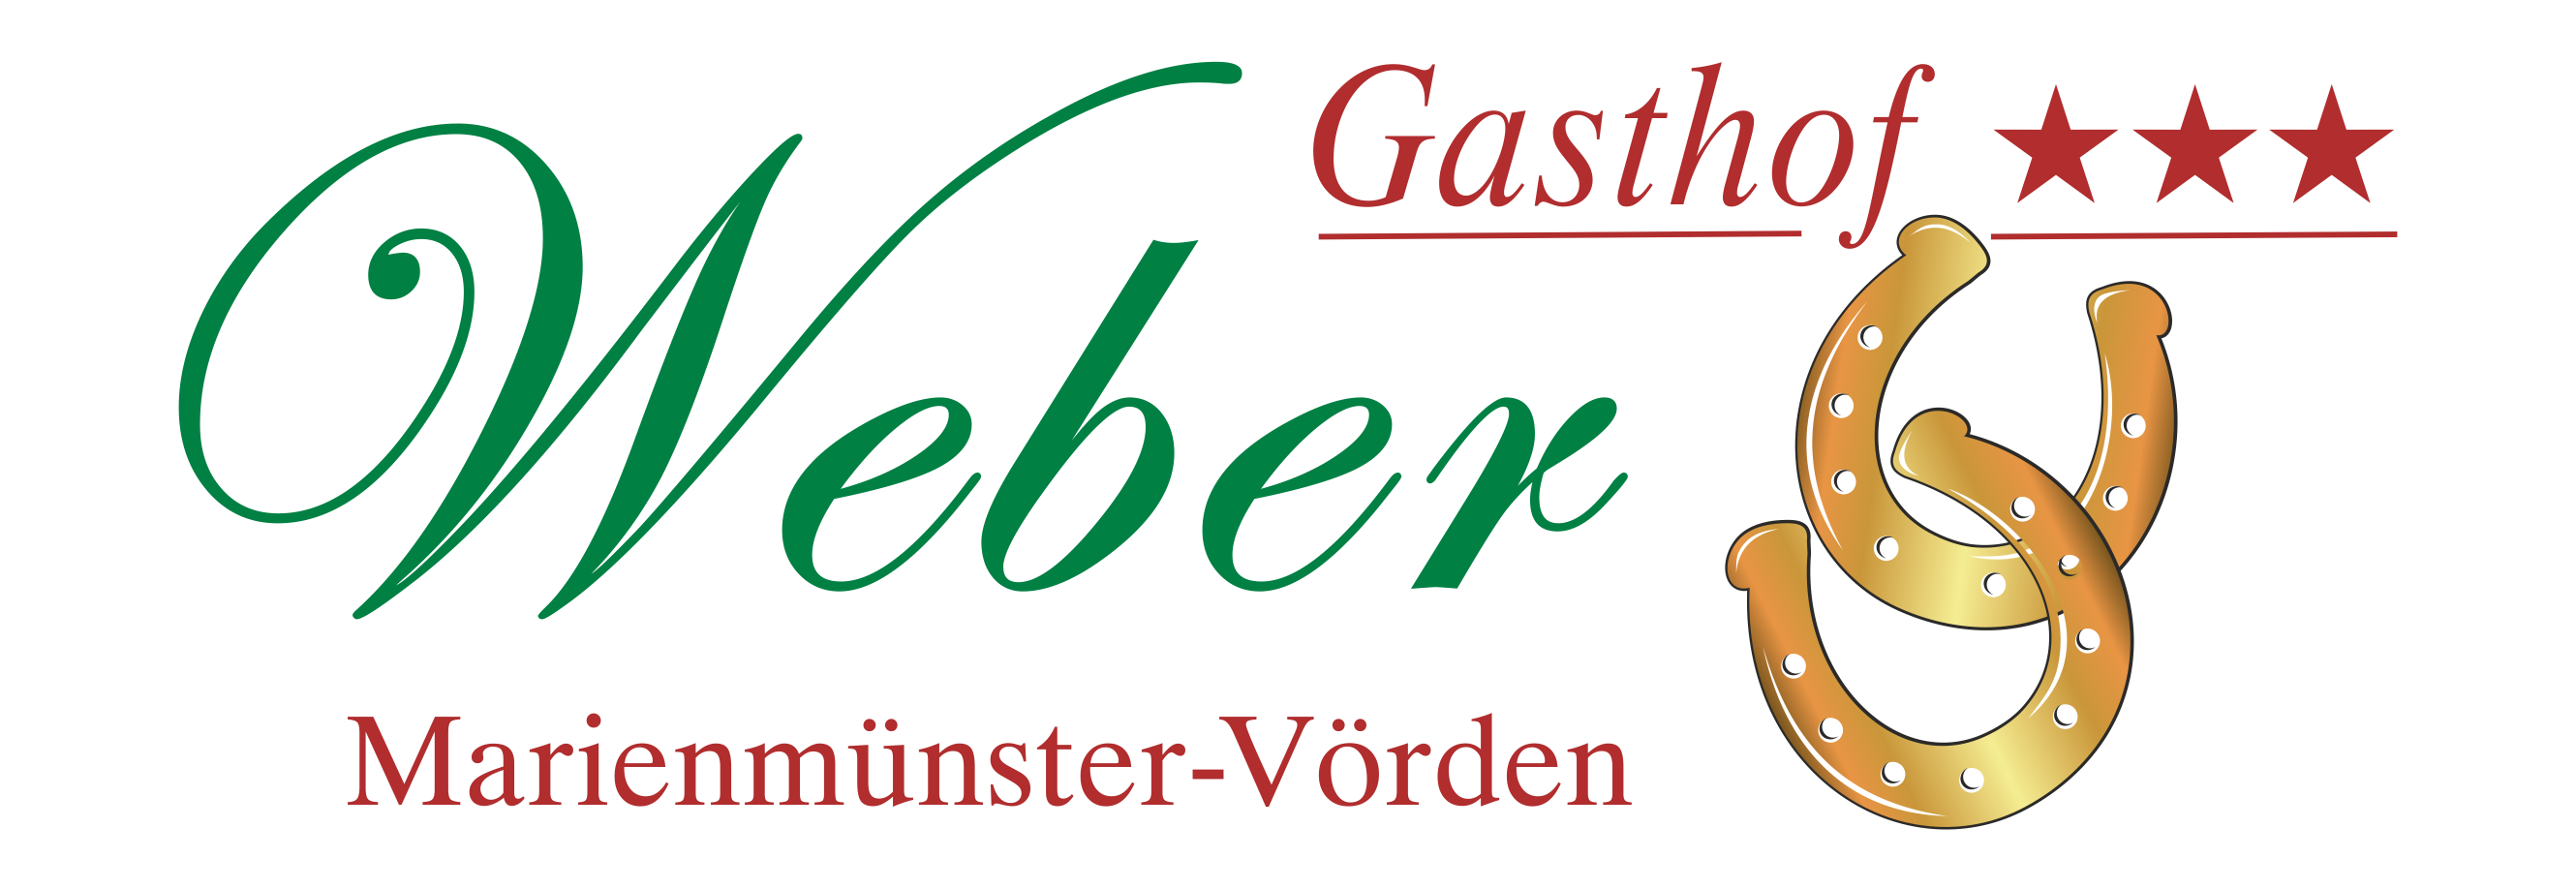 Hotel & Gasthof Weber in Marienmünster-Vörden